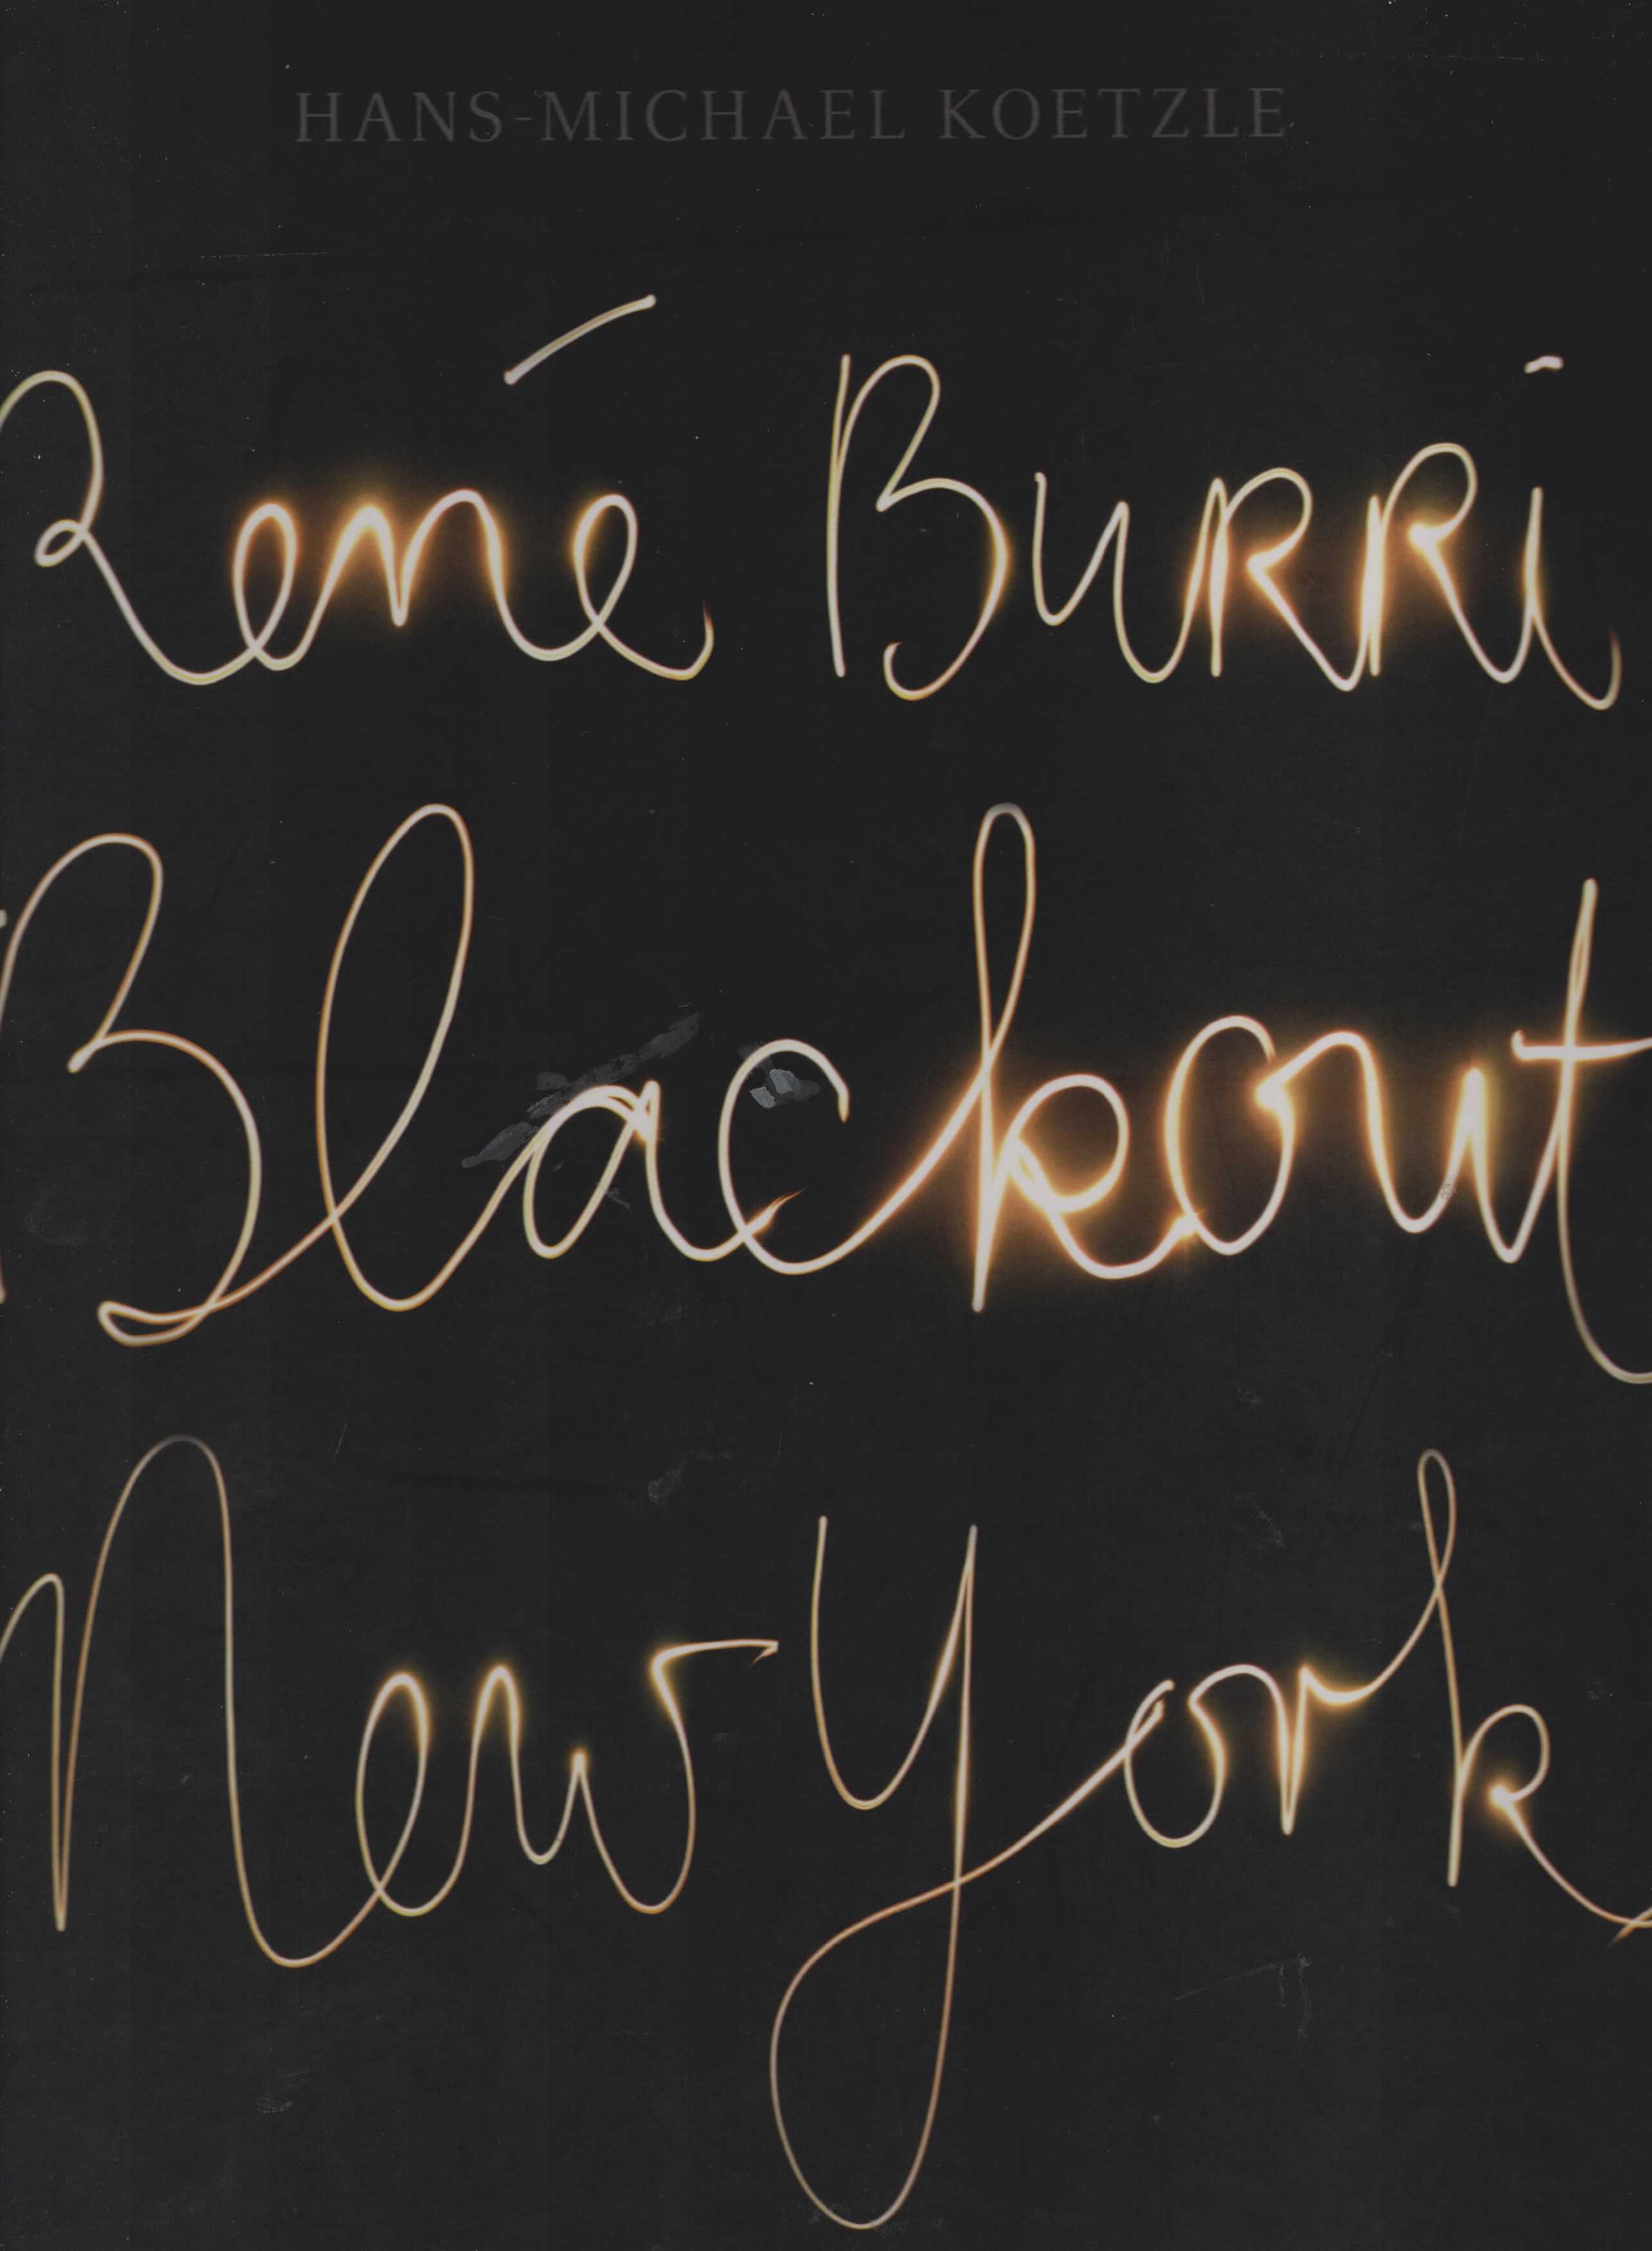 Blackout New York : 9. November 1965. Mit einem Text von Hans-Michael Koetzle. - Burri, René (Fotos)